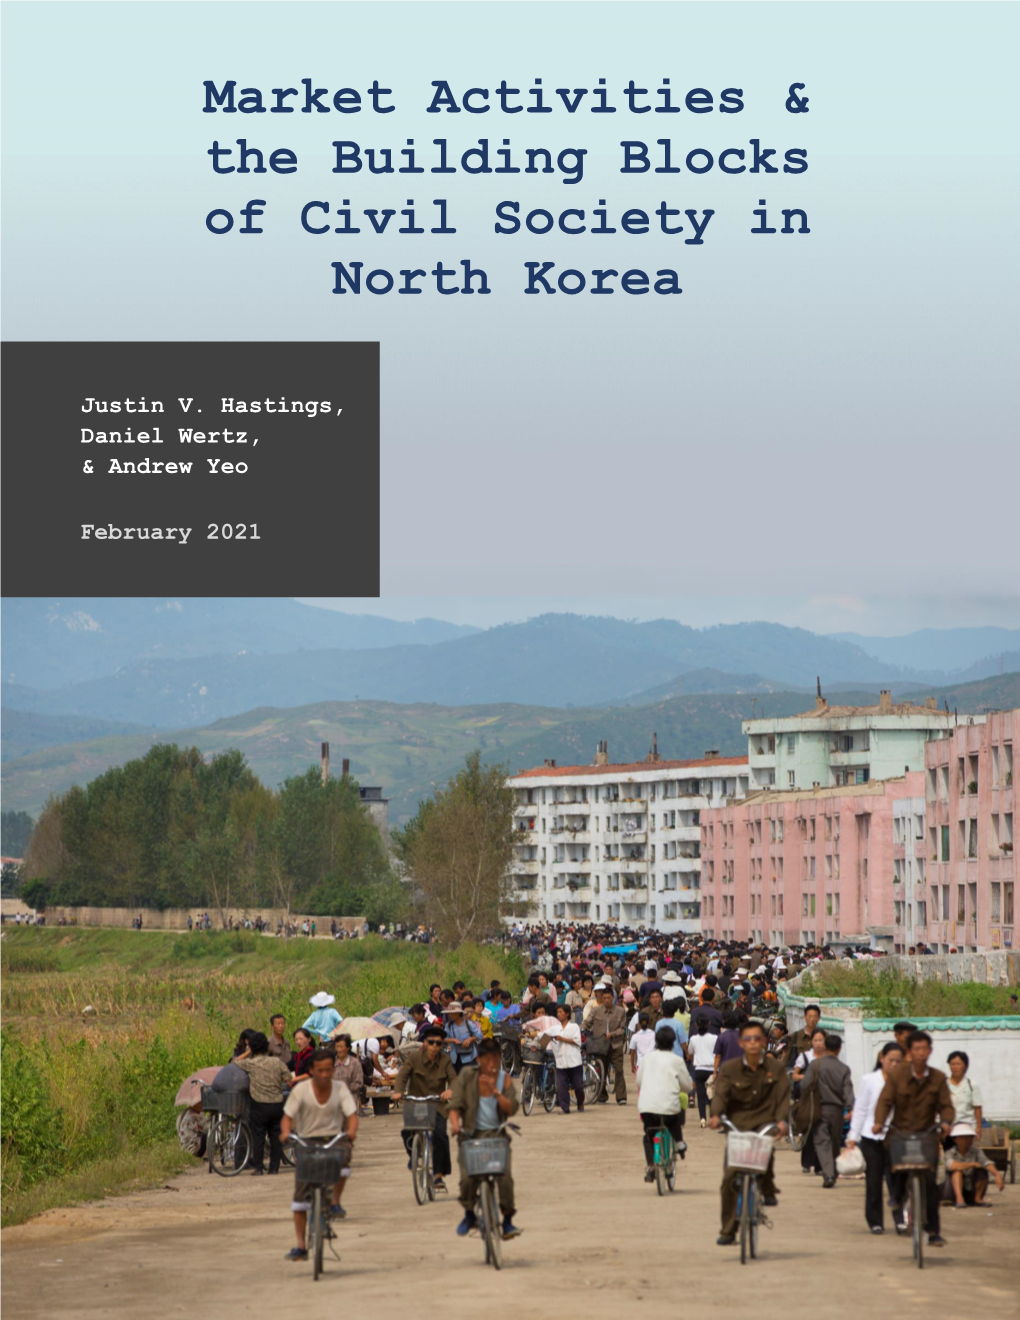 Market Activities & the Building Blocks of Civil Society in North Korea